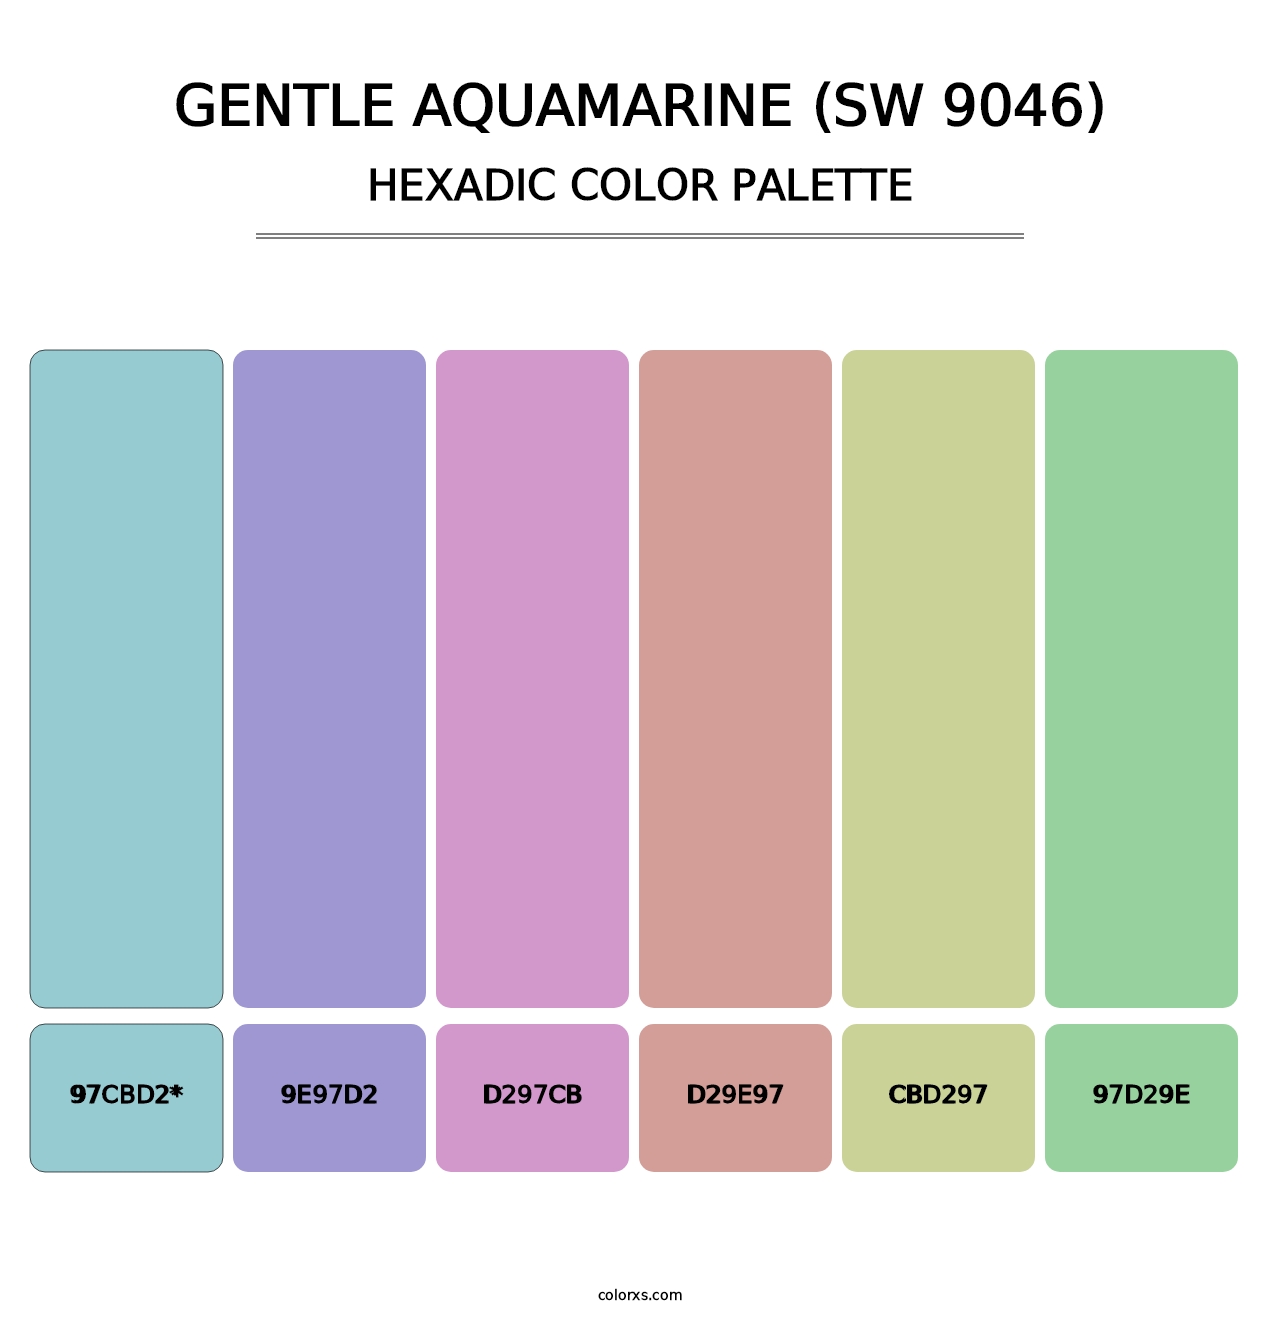 Gentle Aquamarine (SW 9046) - Hexadic Color Palette